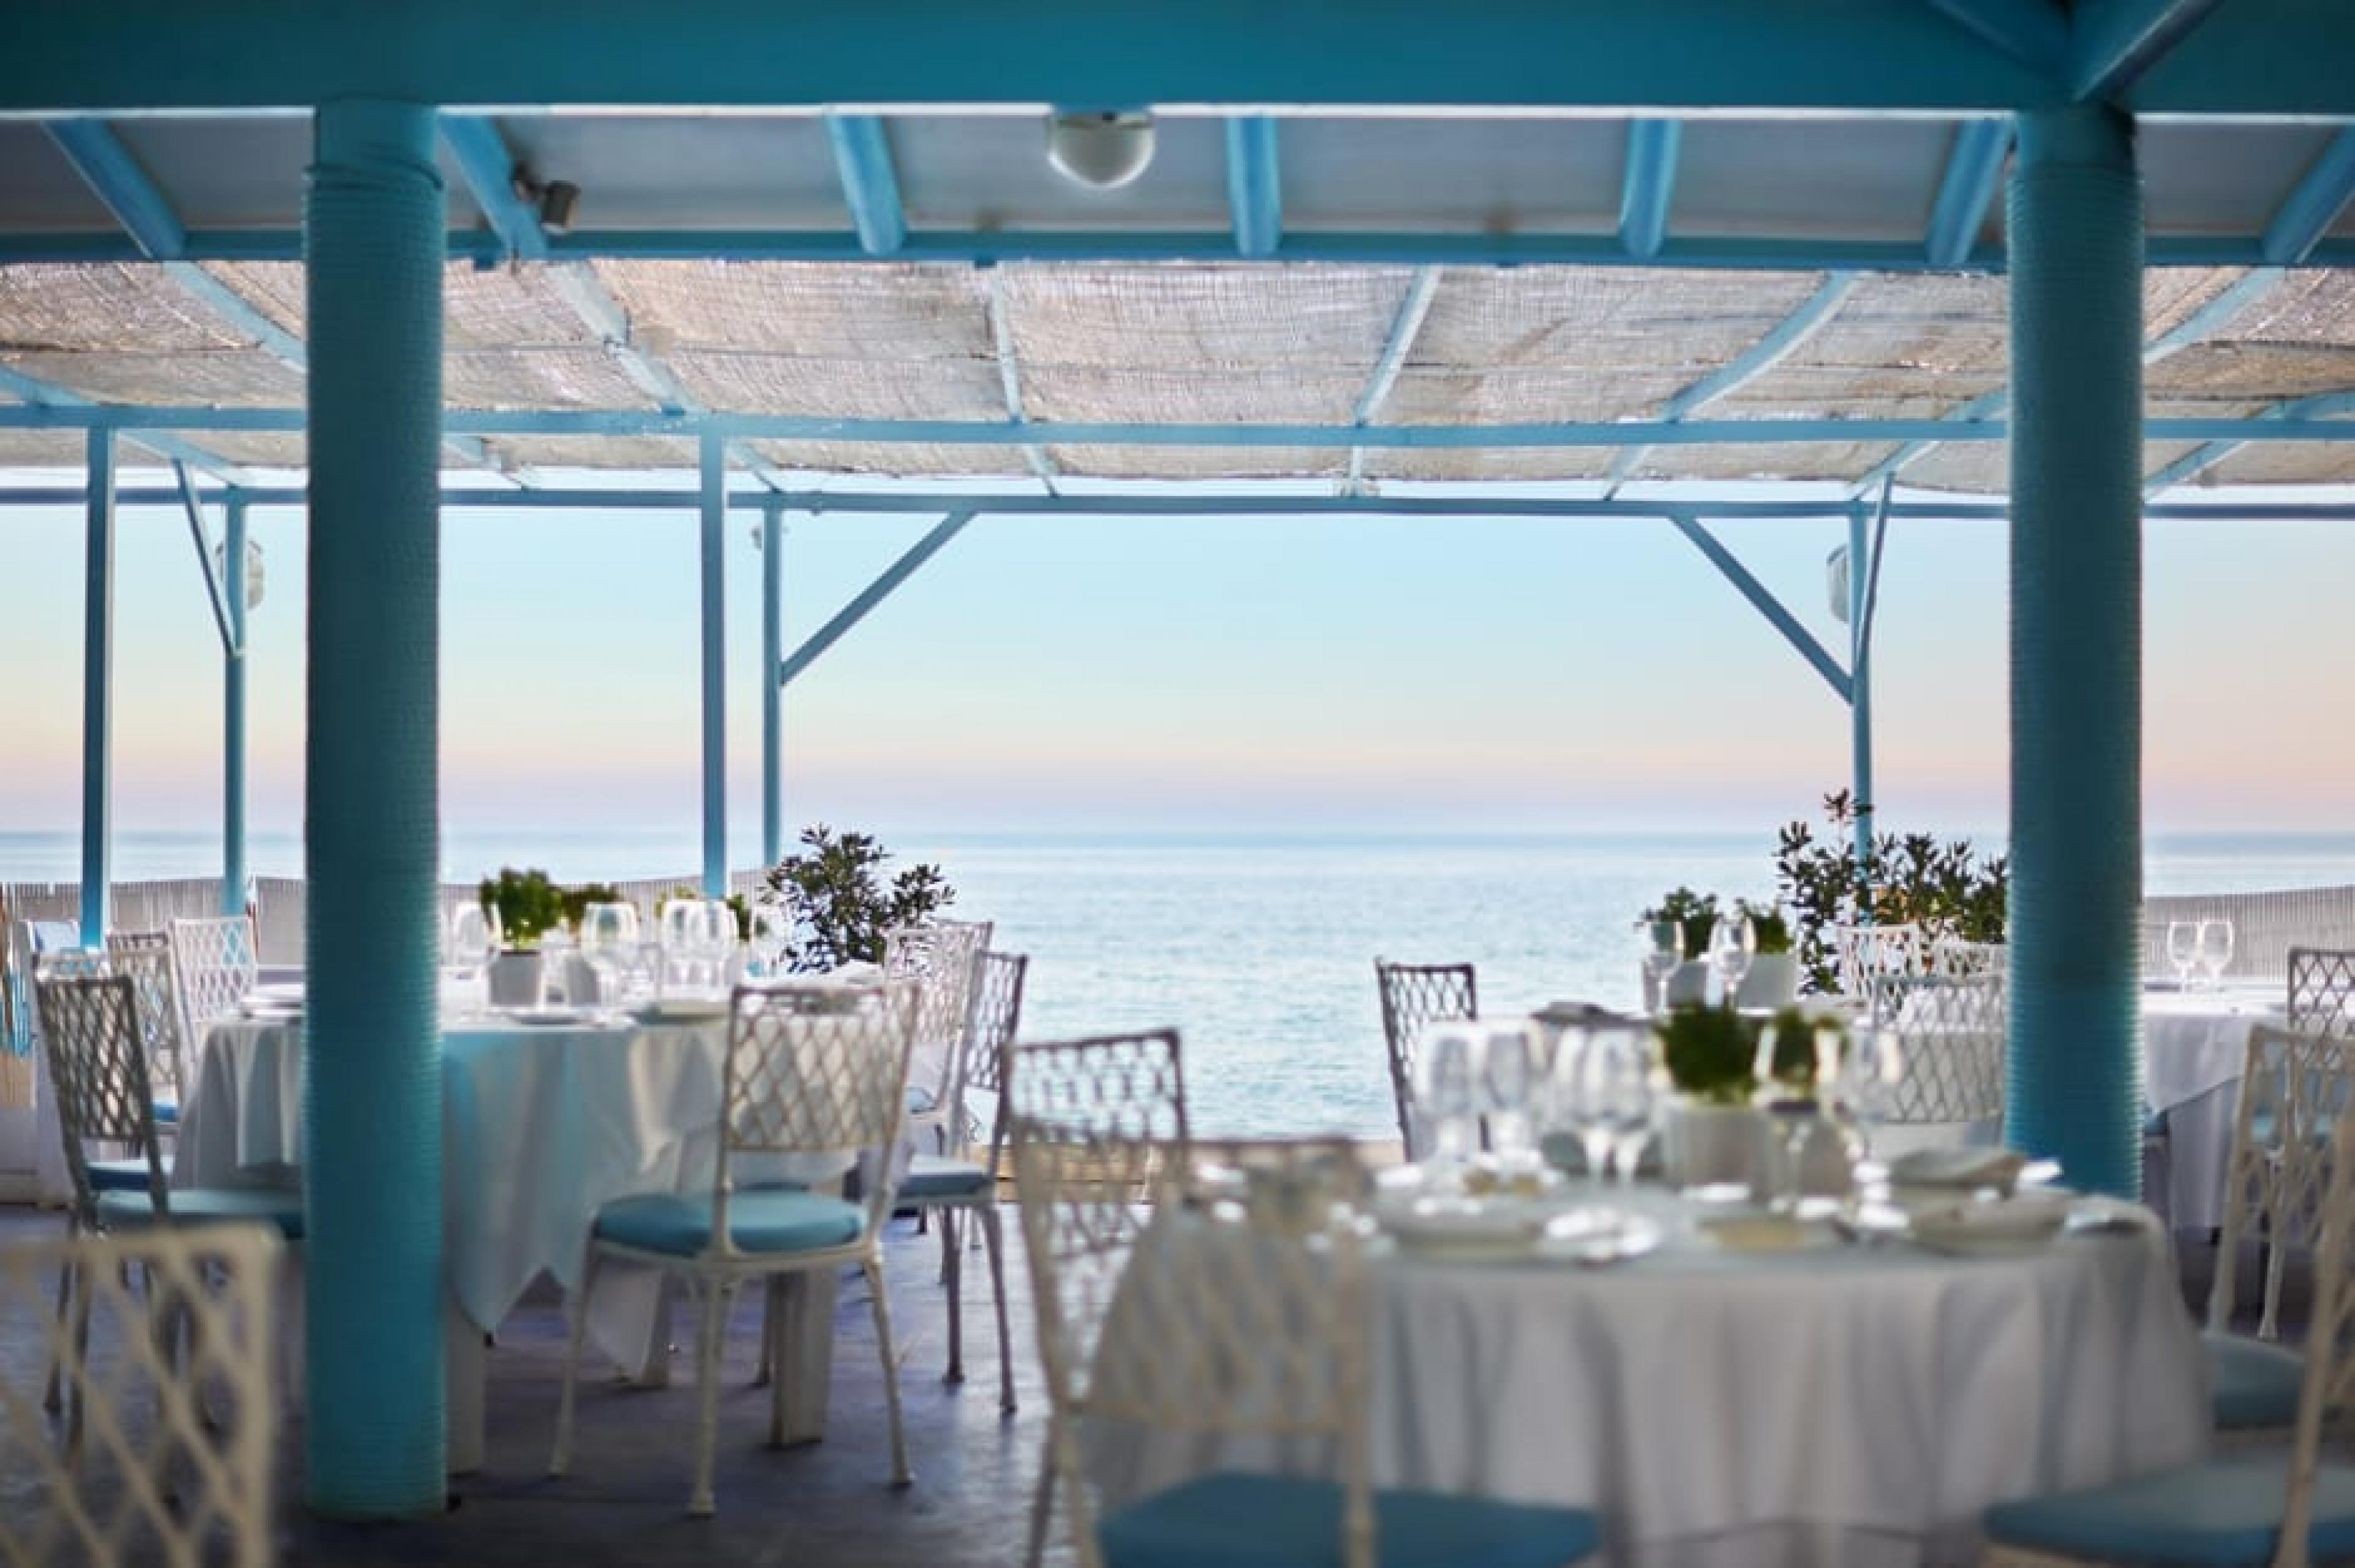 Dinning Area at MC Beach, Marbella, Spain